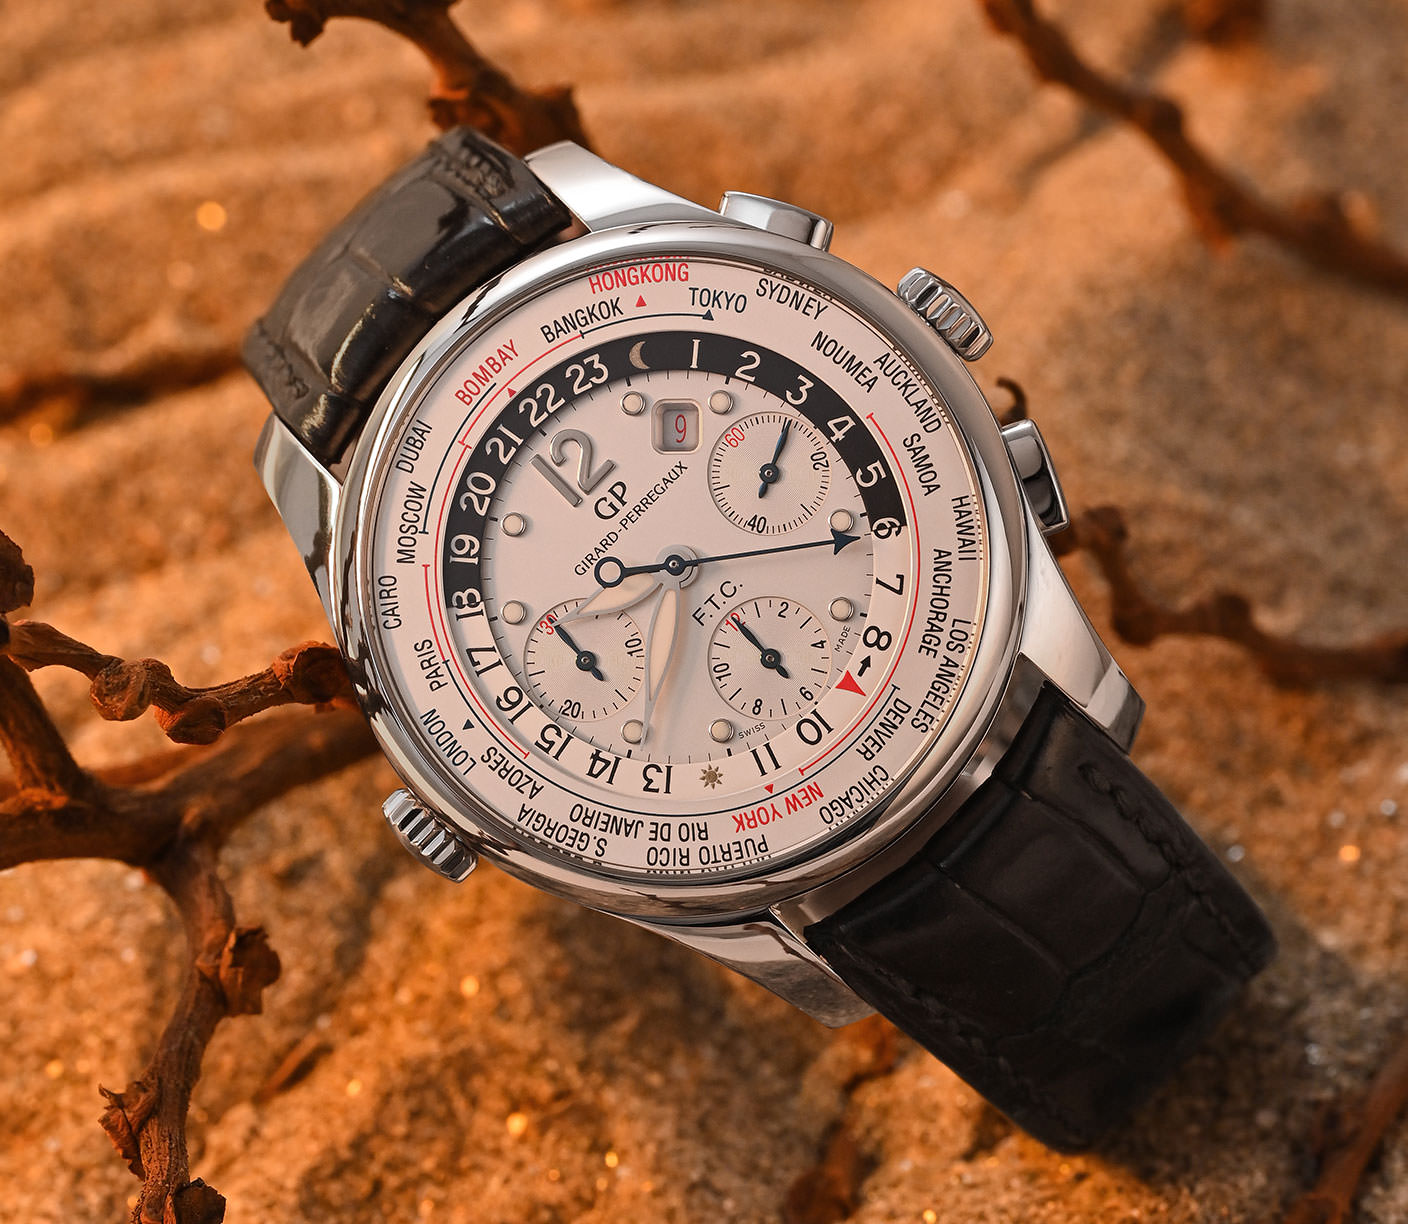 Girard-Perregaux worldtimer watch